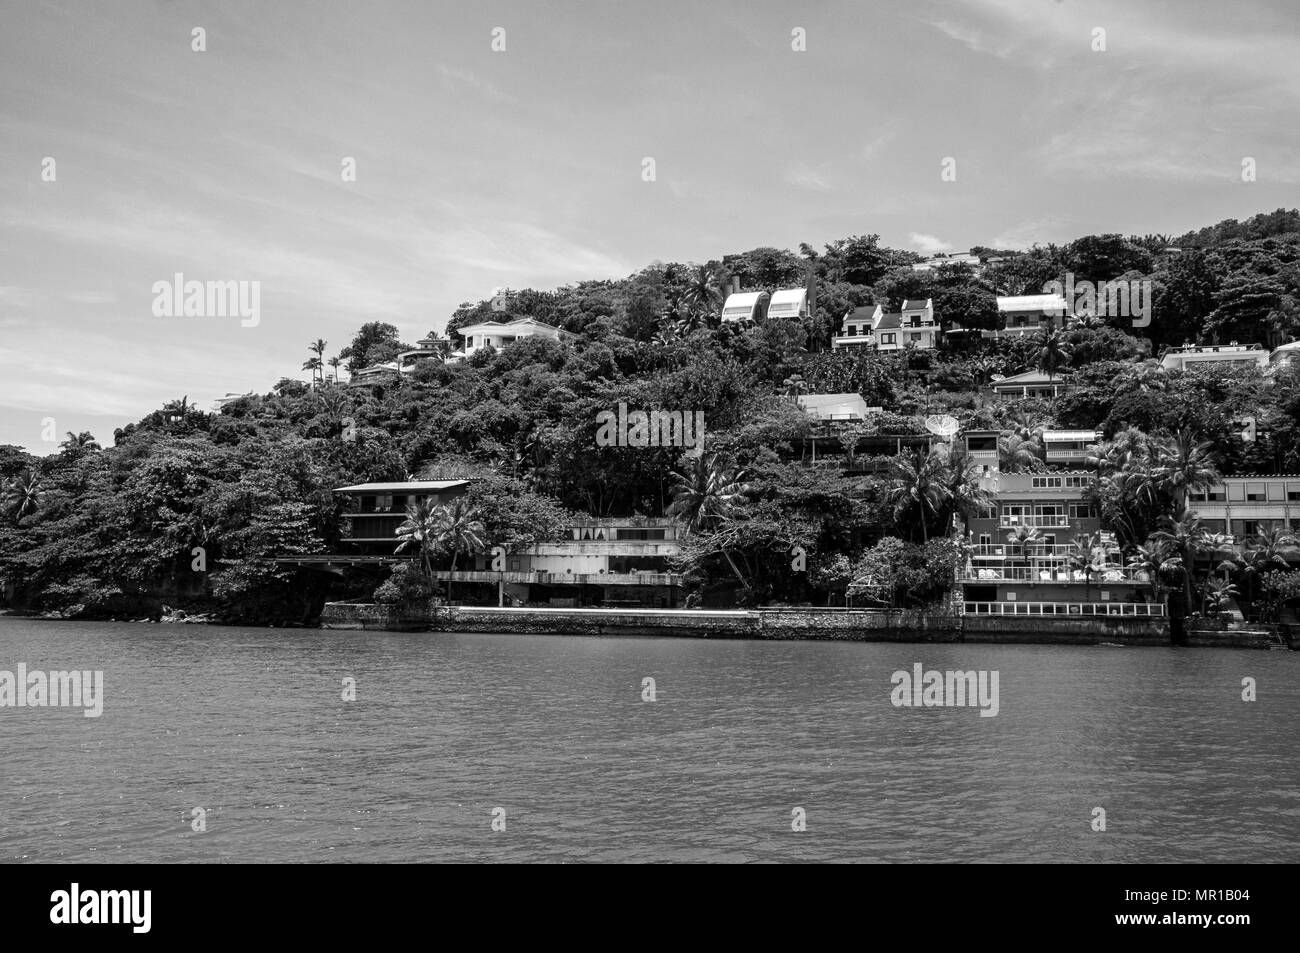 Stadt Guaruja Brasilien Seeküste panorama Tortugas Hügel Häuser schwarz weiß Stockfoto